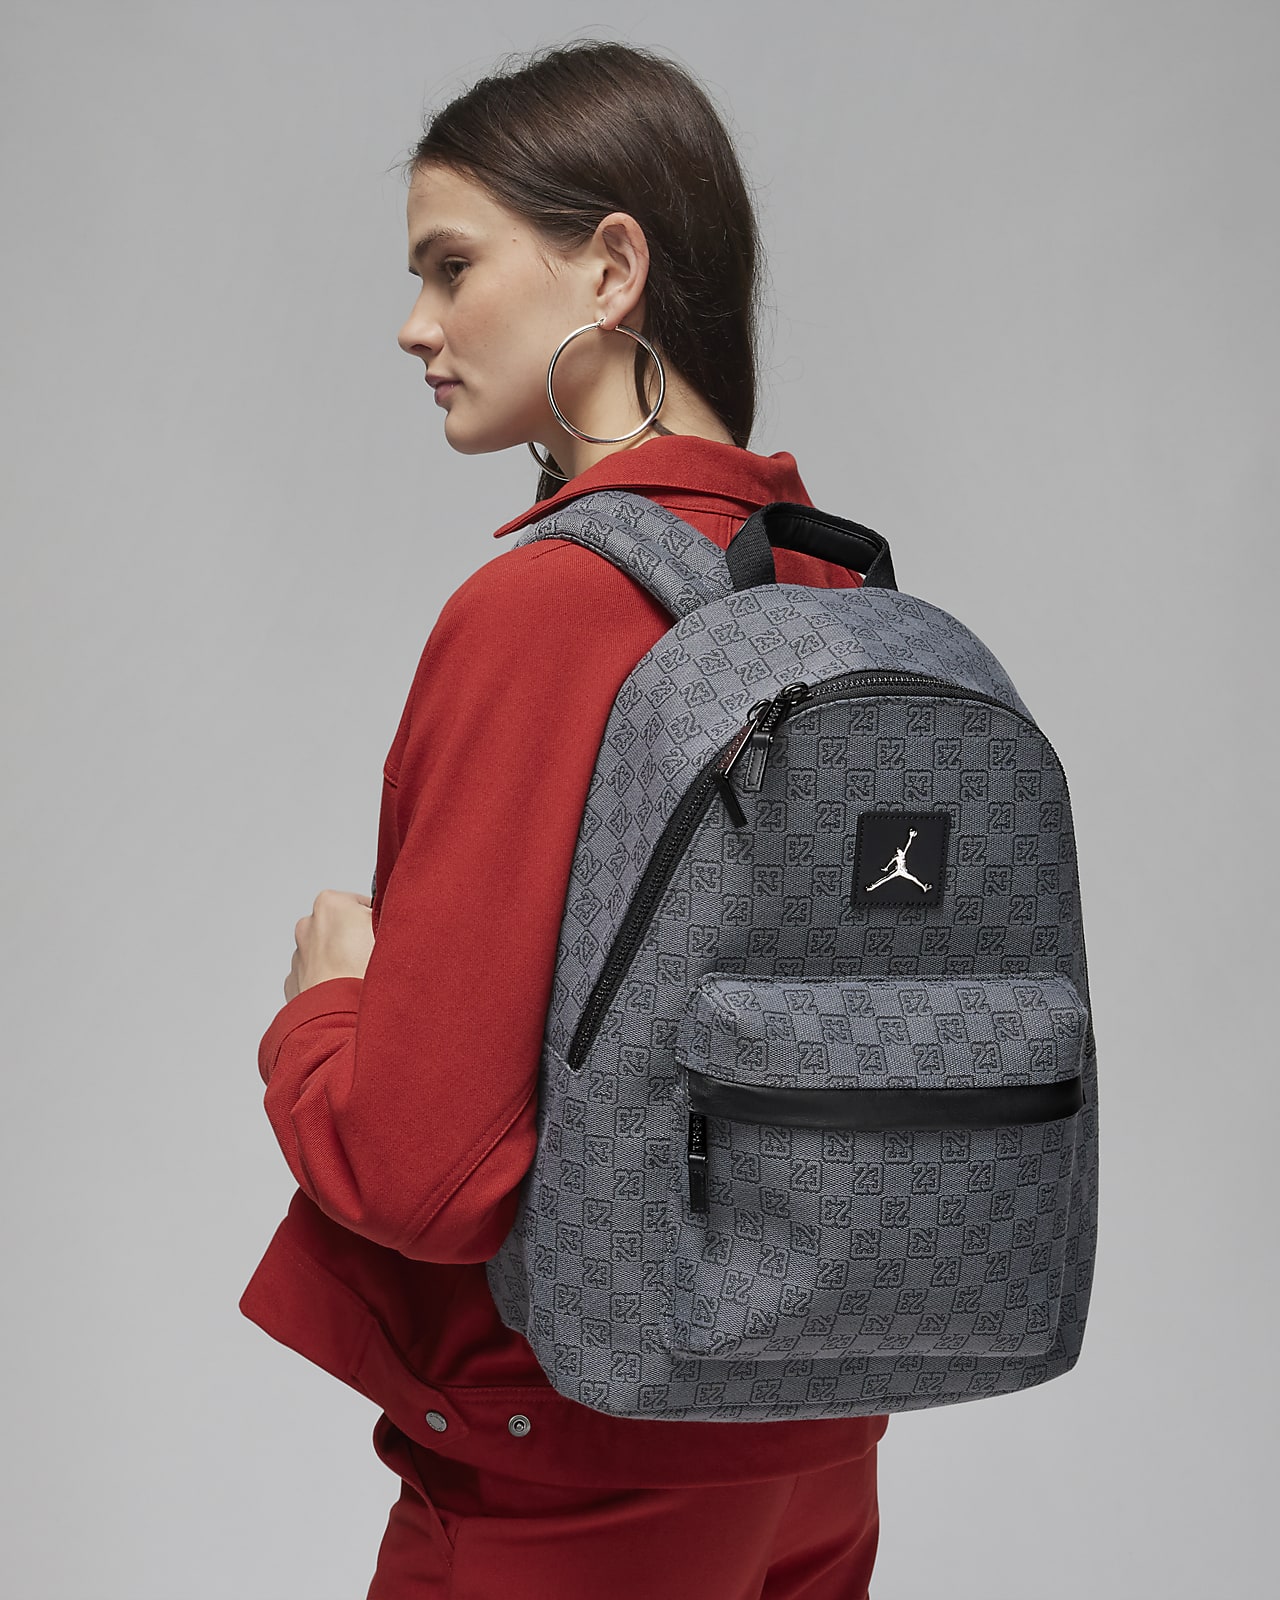 Jordan Monogram Backpack Backpack. Nike LU